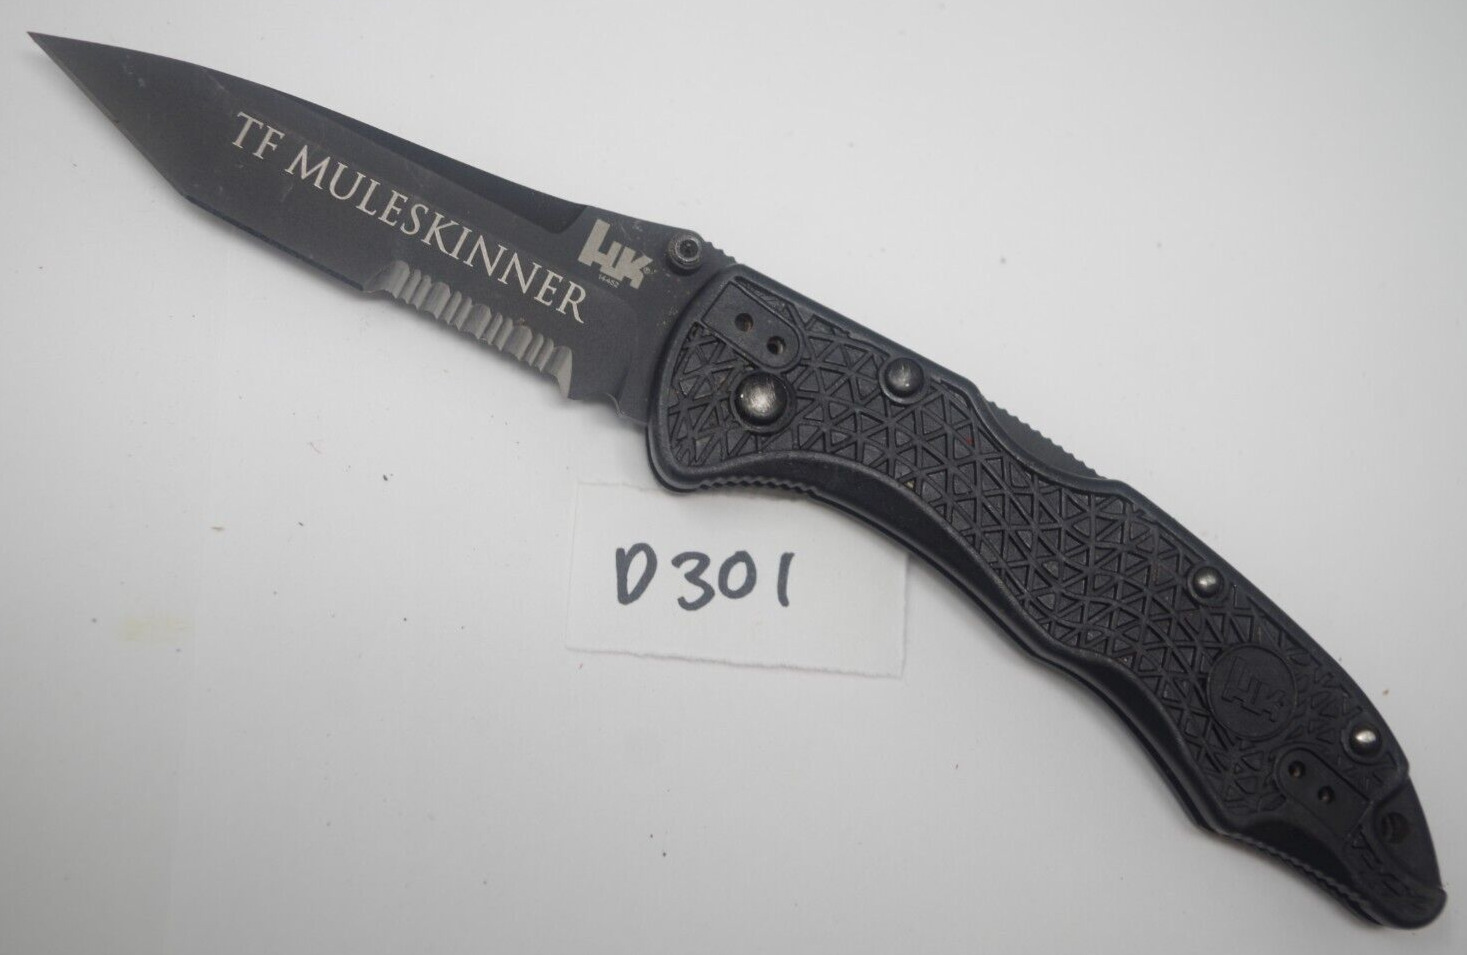 HK Pika II Heckler & Koch Tanto Combo Edged Blade Benchmade 14452 Pocket Knife